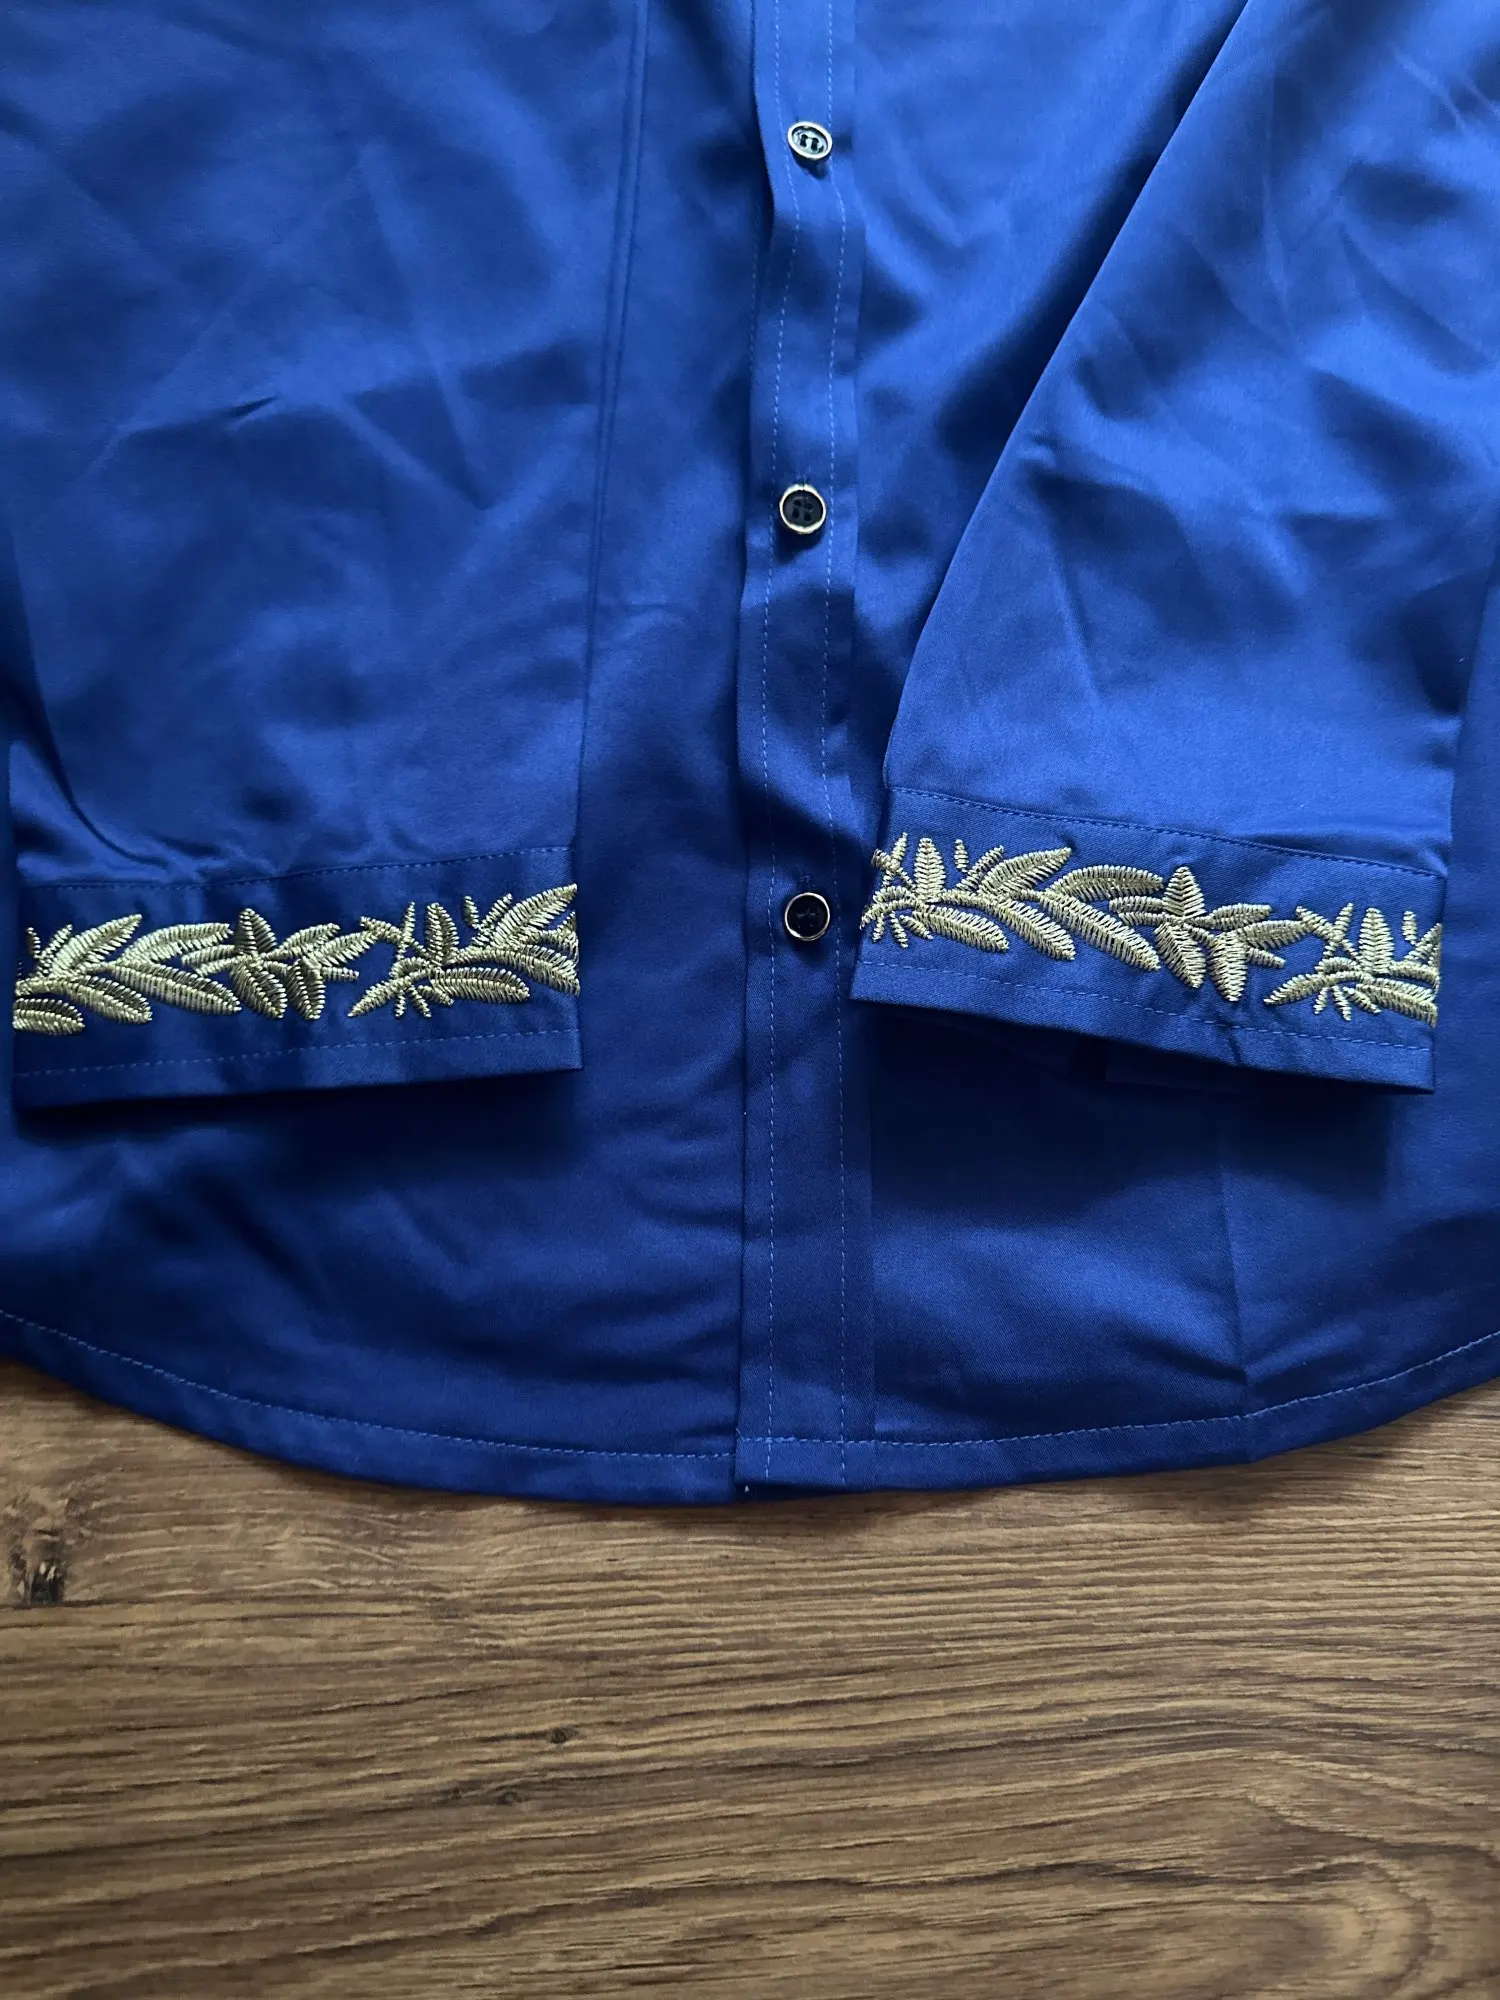 Men's Royal Blue Dress Shirts 2022 Brand Banded Mandarin Collar Shirt Male Long Sleeve Casual Button Down Shirt with Pocket 2XL photo review